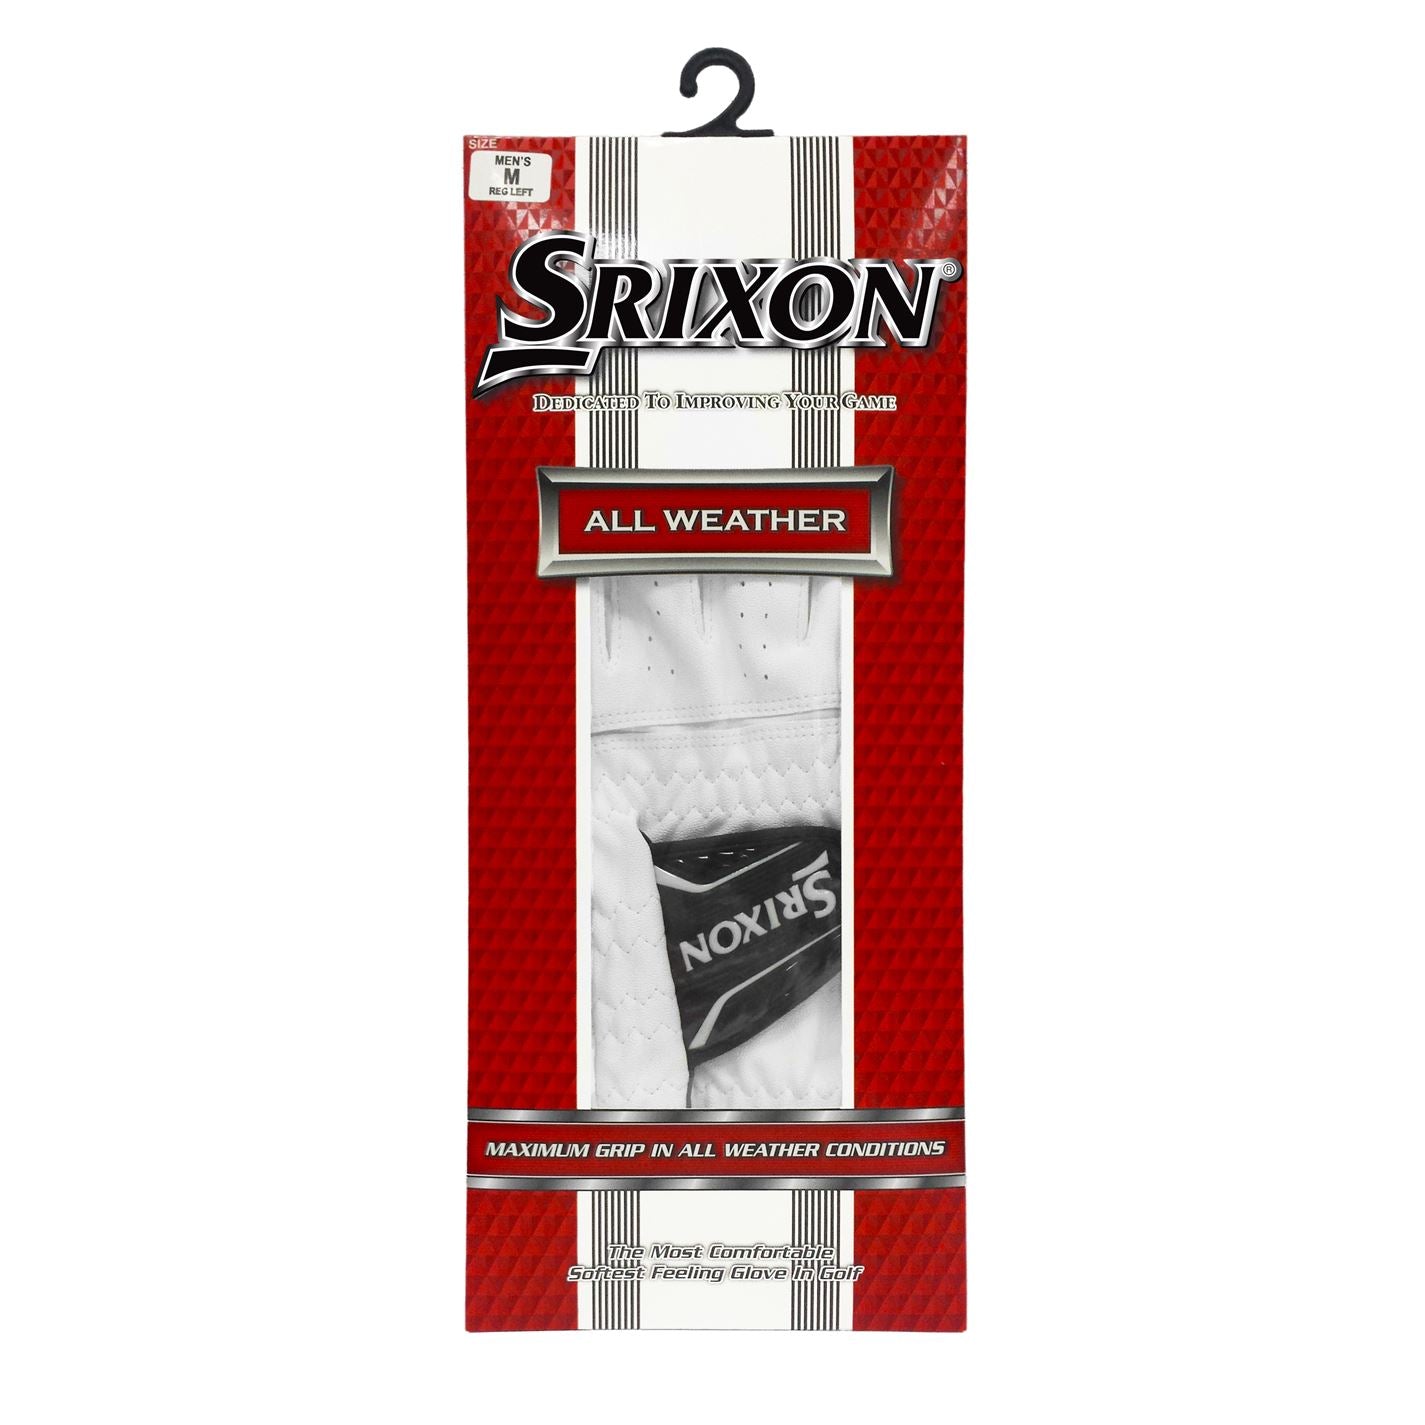 Srixon All Weather Gloves